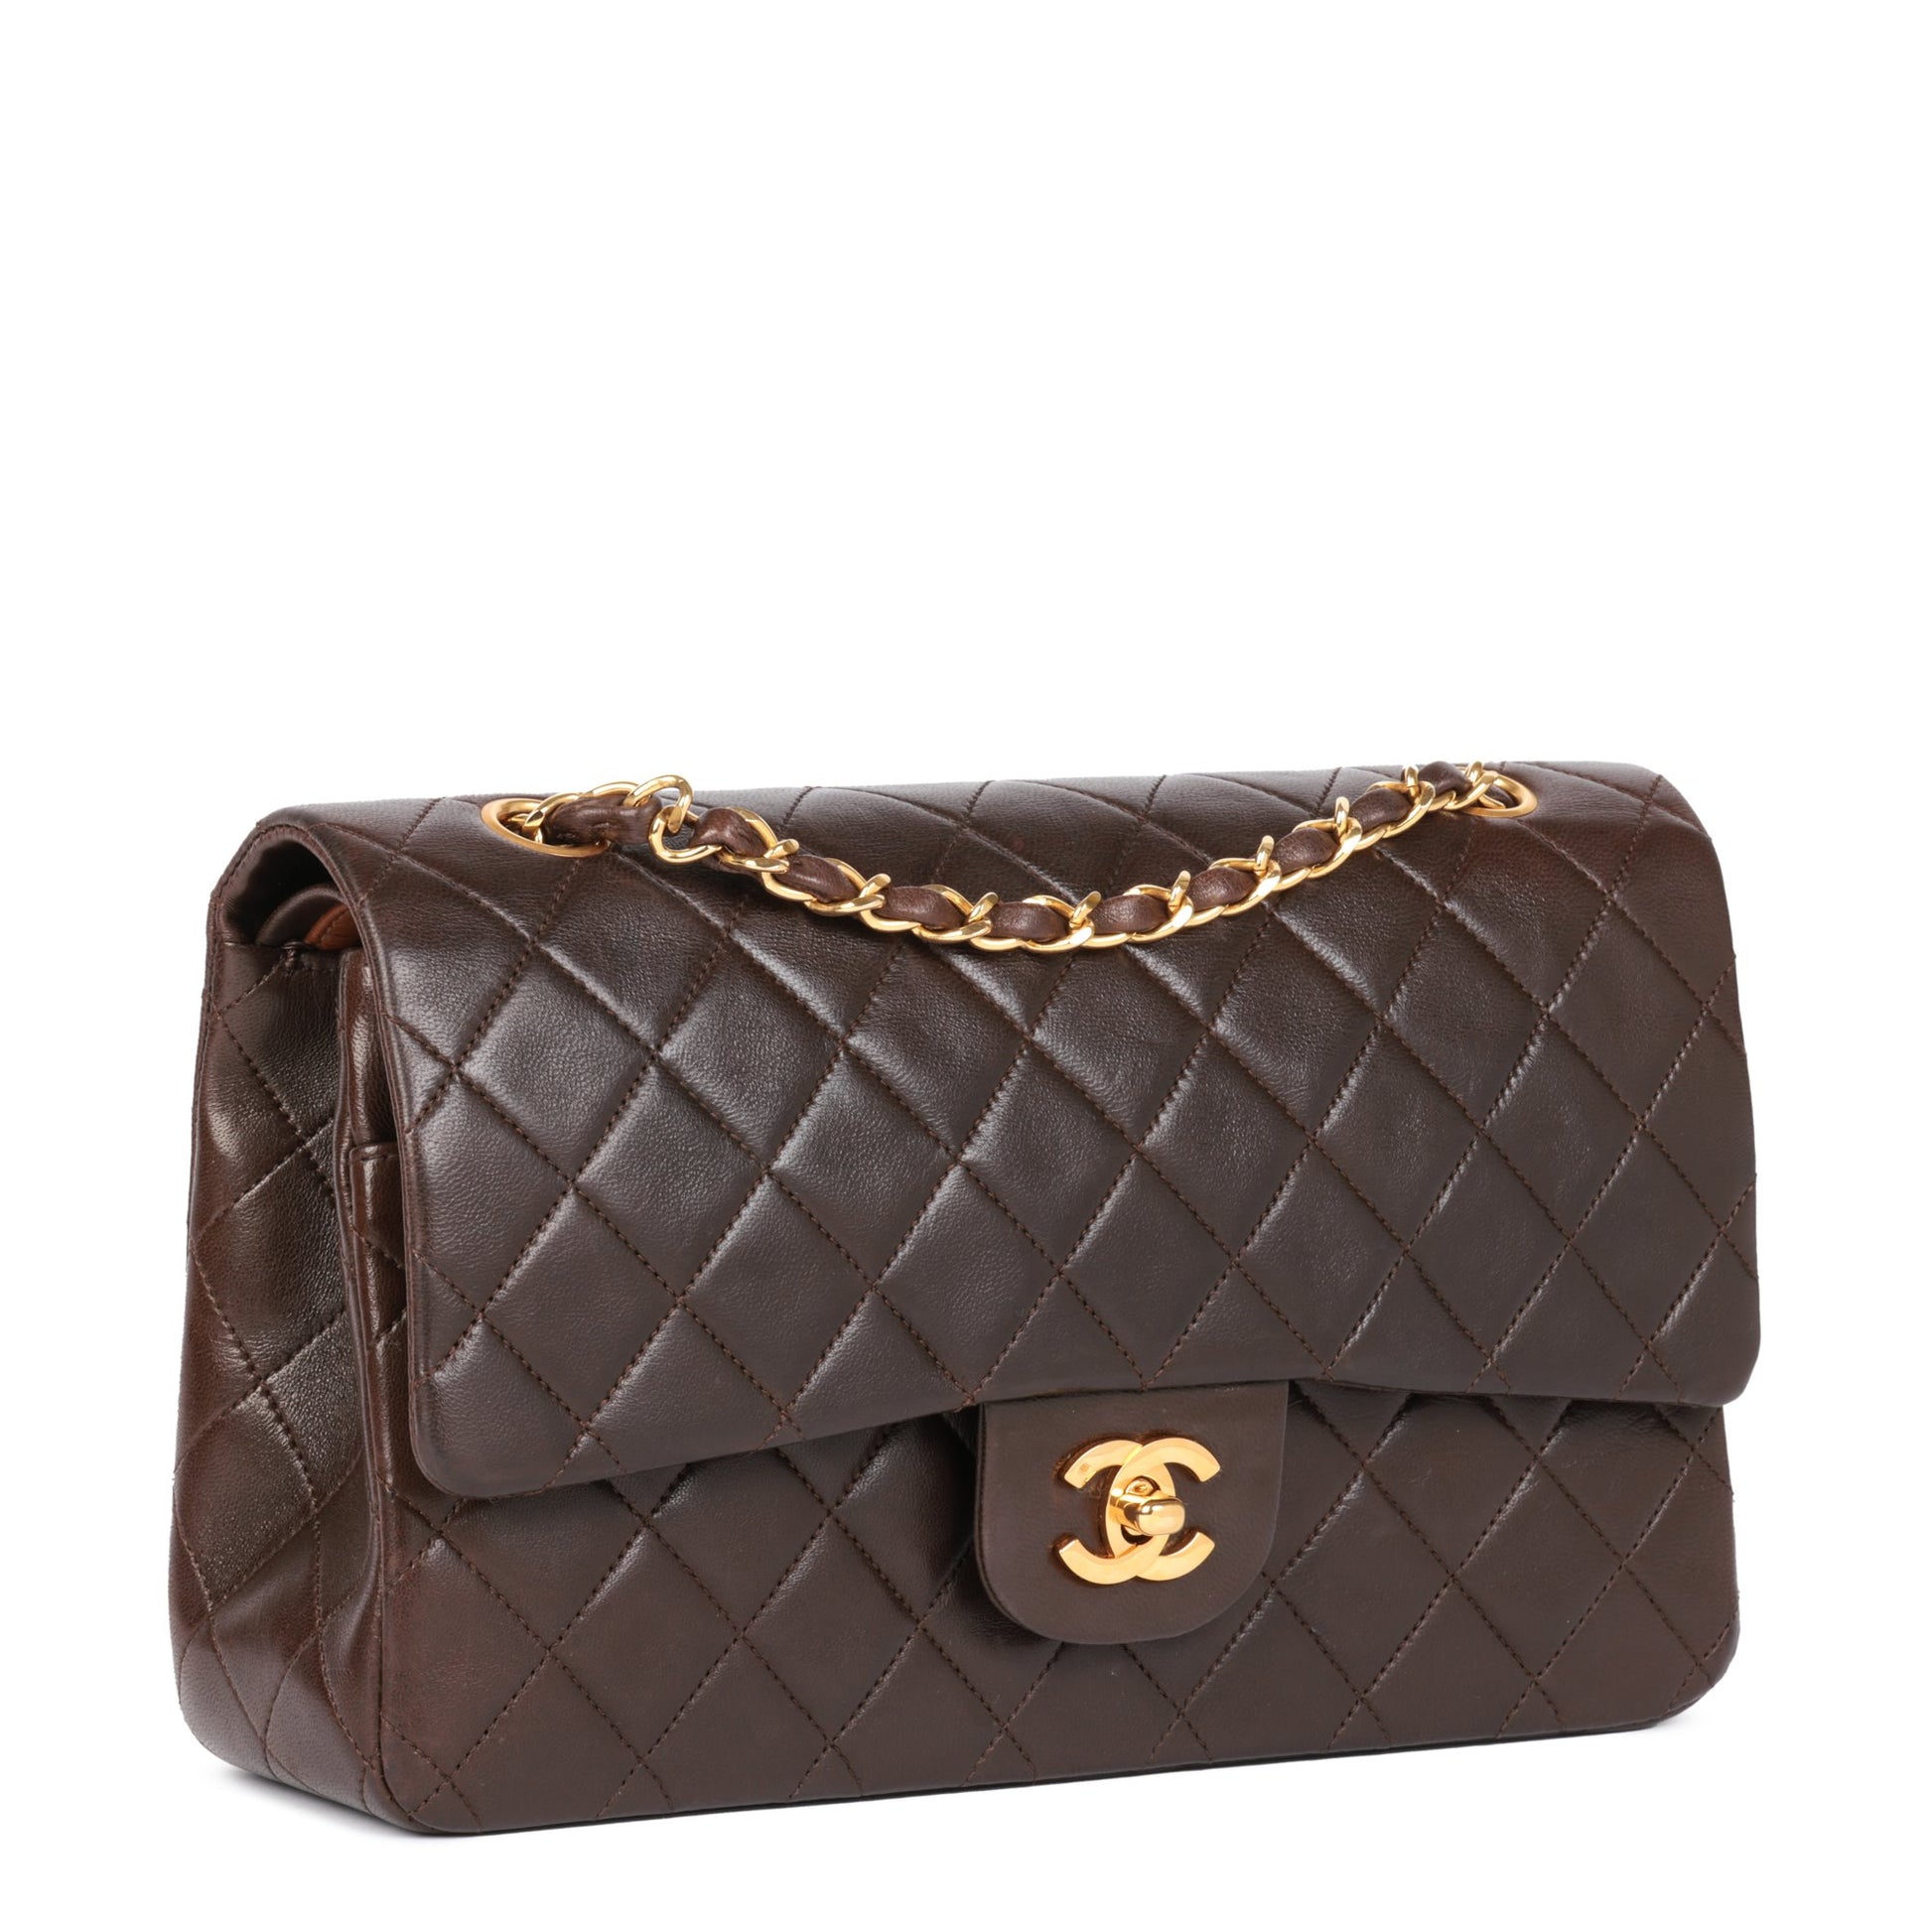 Sell Chanel Vintage Lambskin Quilted Shoulder Bag - Brown